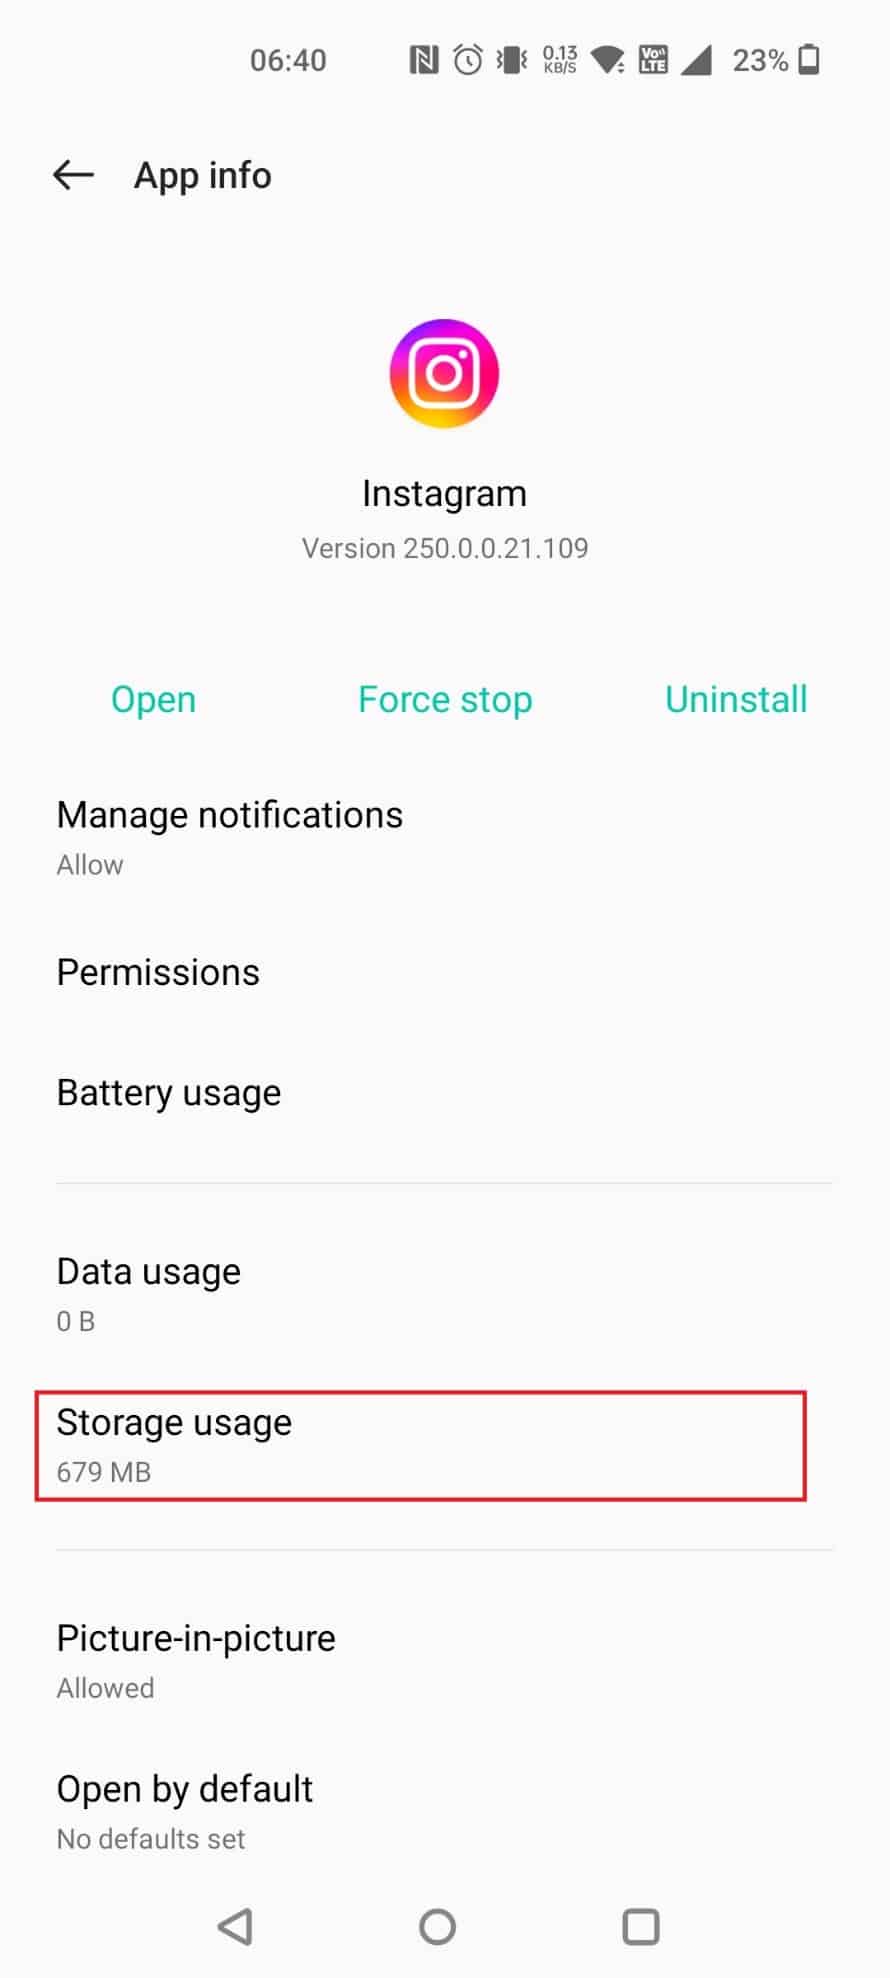 Tap on Storage usage